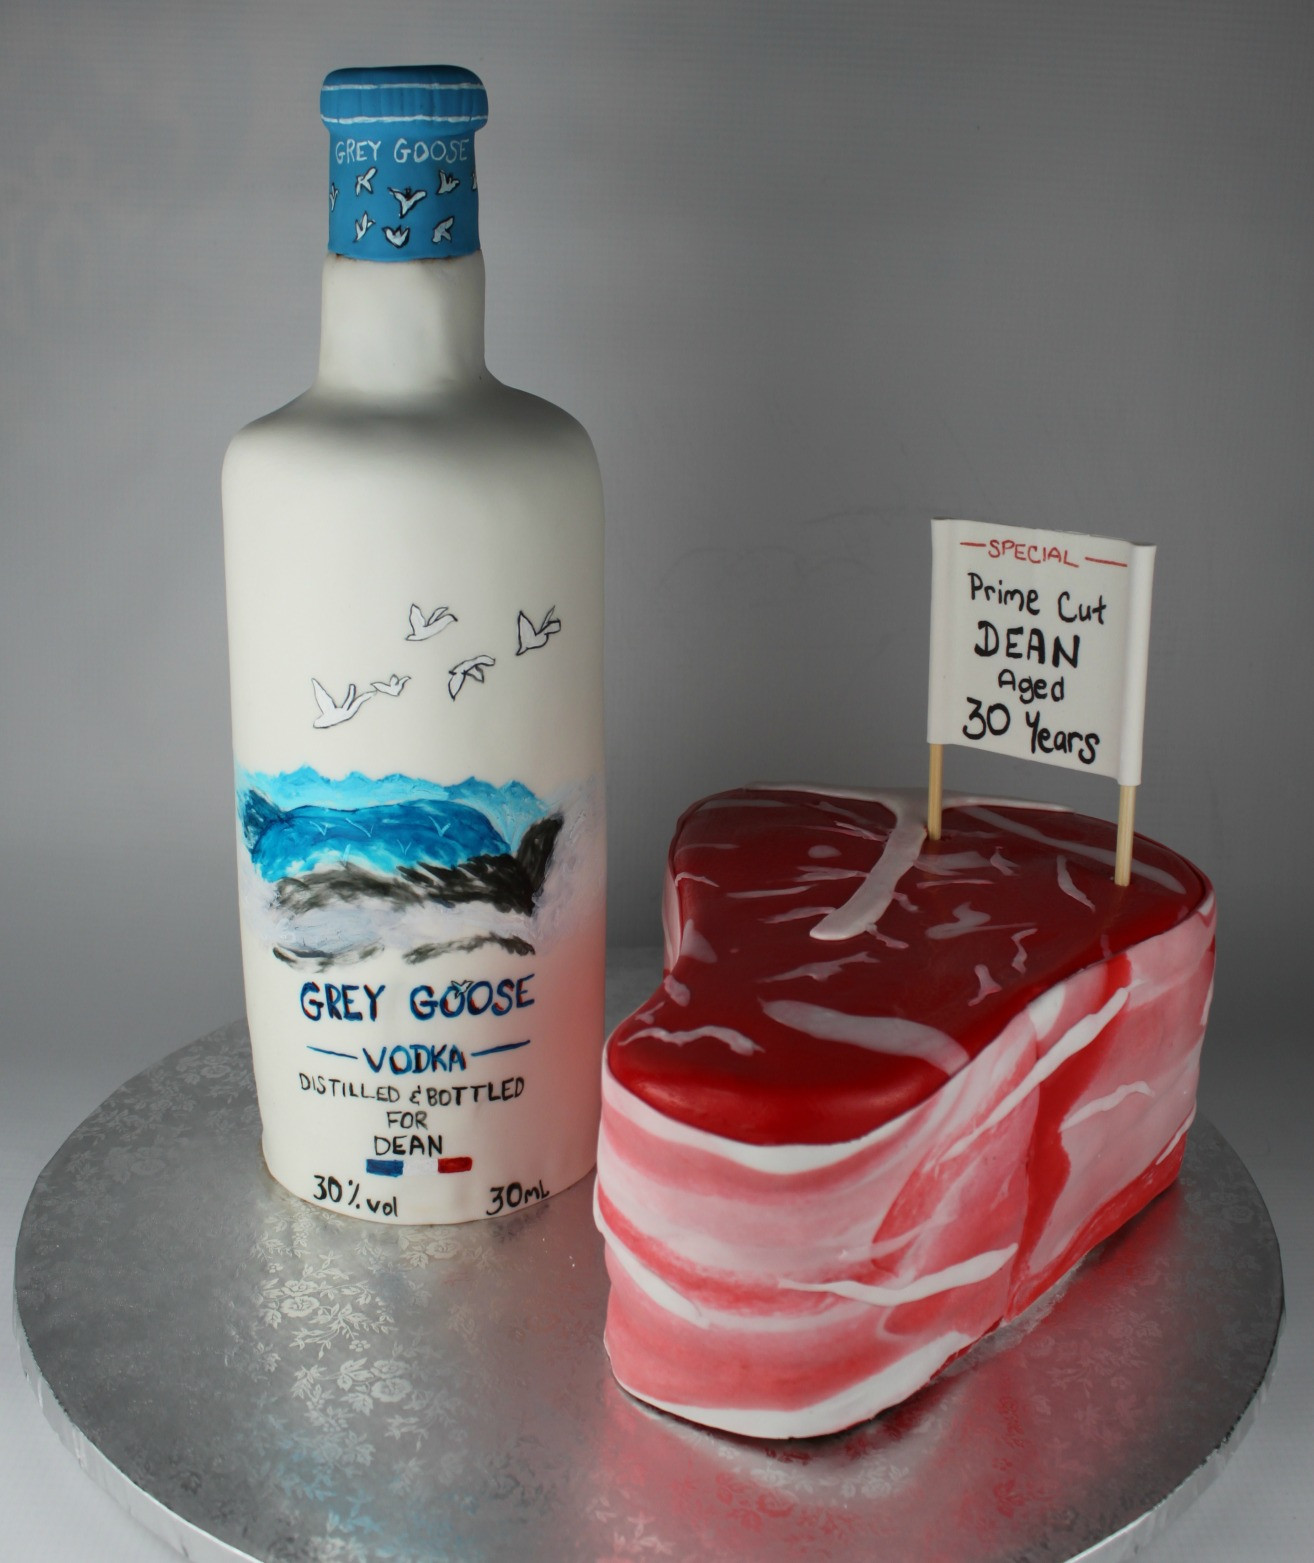 Best ideas about Birthday Cake Vodka
. Save or Pin Steak and Vodka Birthday Cake Now.